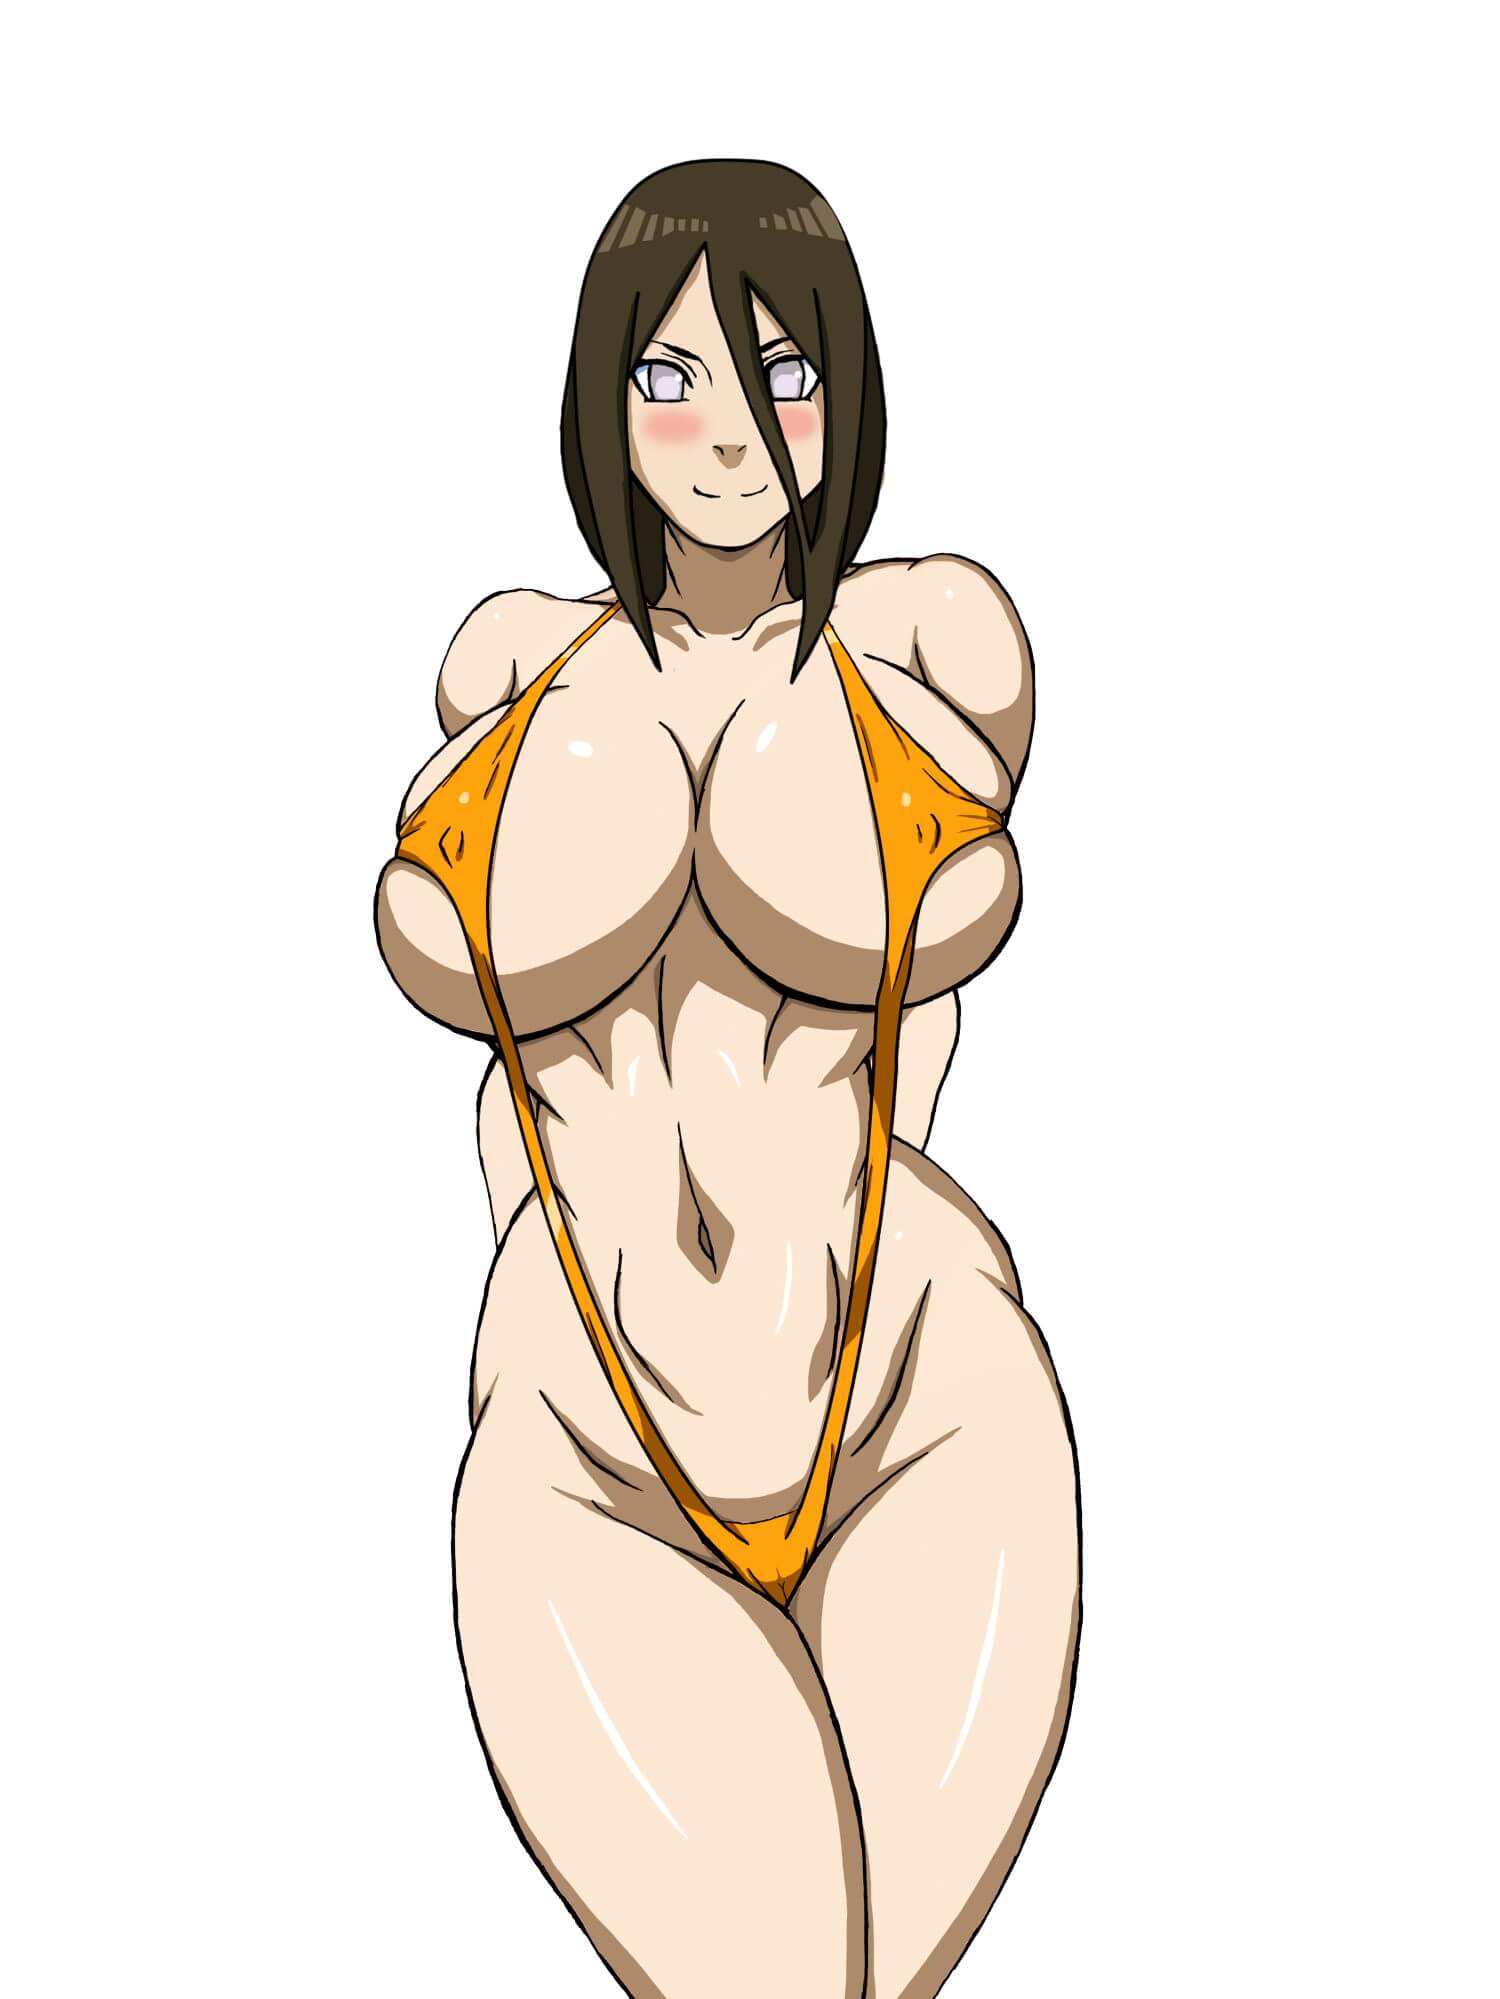 Hanabi Hyuga en maillot de bain obscène moulant ses miches oppai - Naruto Hentai